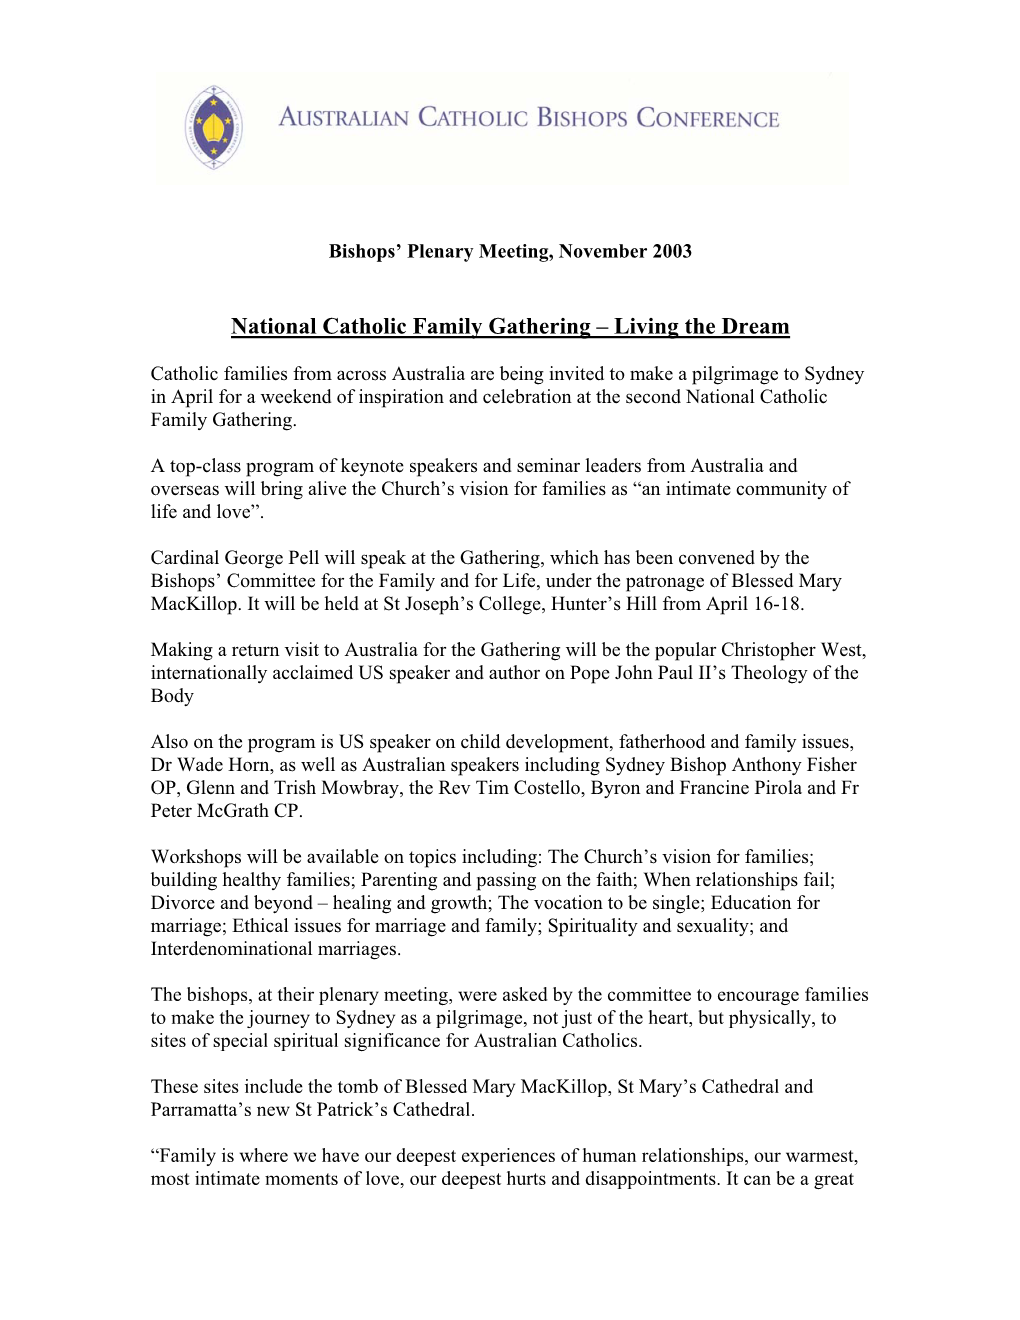 National Catholic Family Gathering – Living the Dream